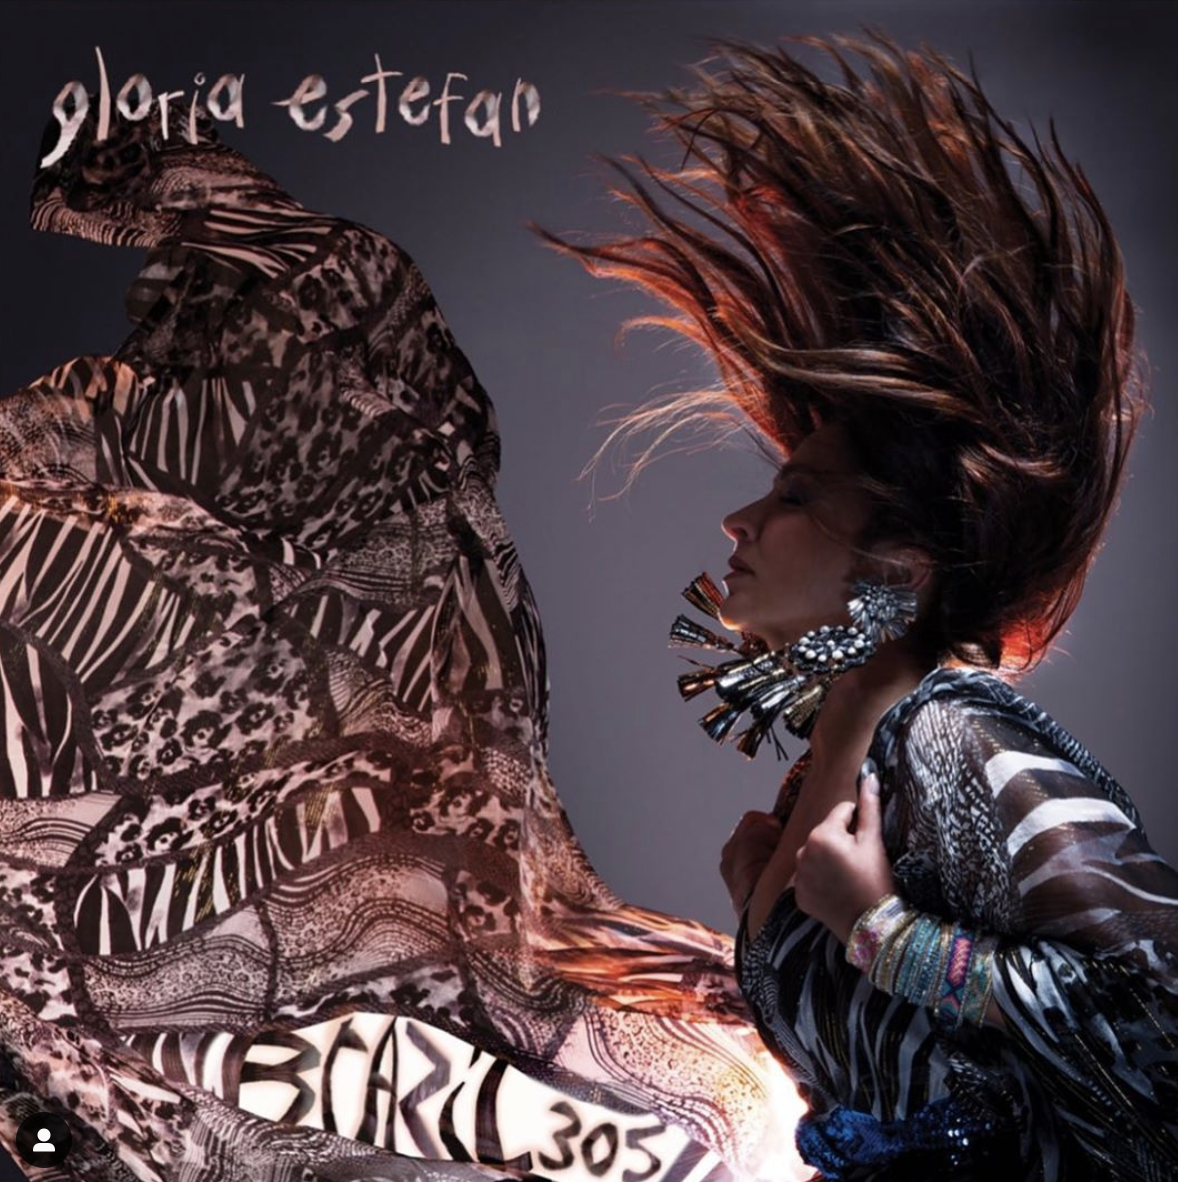 Gloria Stefan wearing Ayonuik for her album cover, July 2020, Miami FL